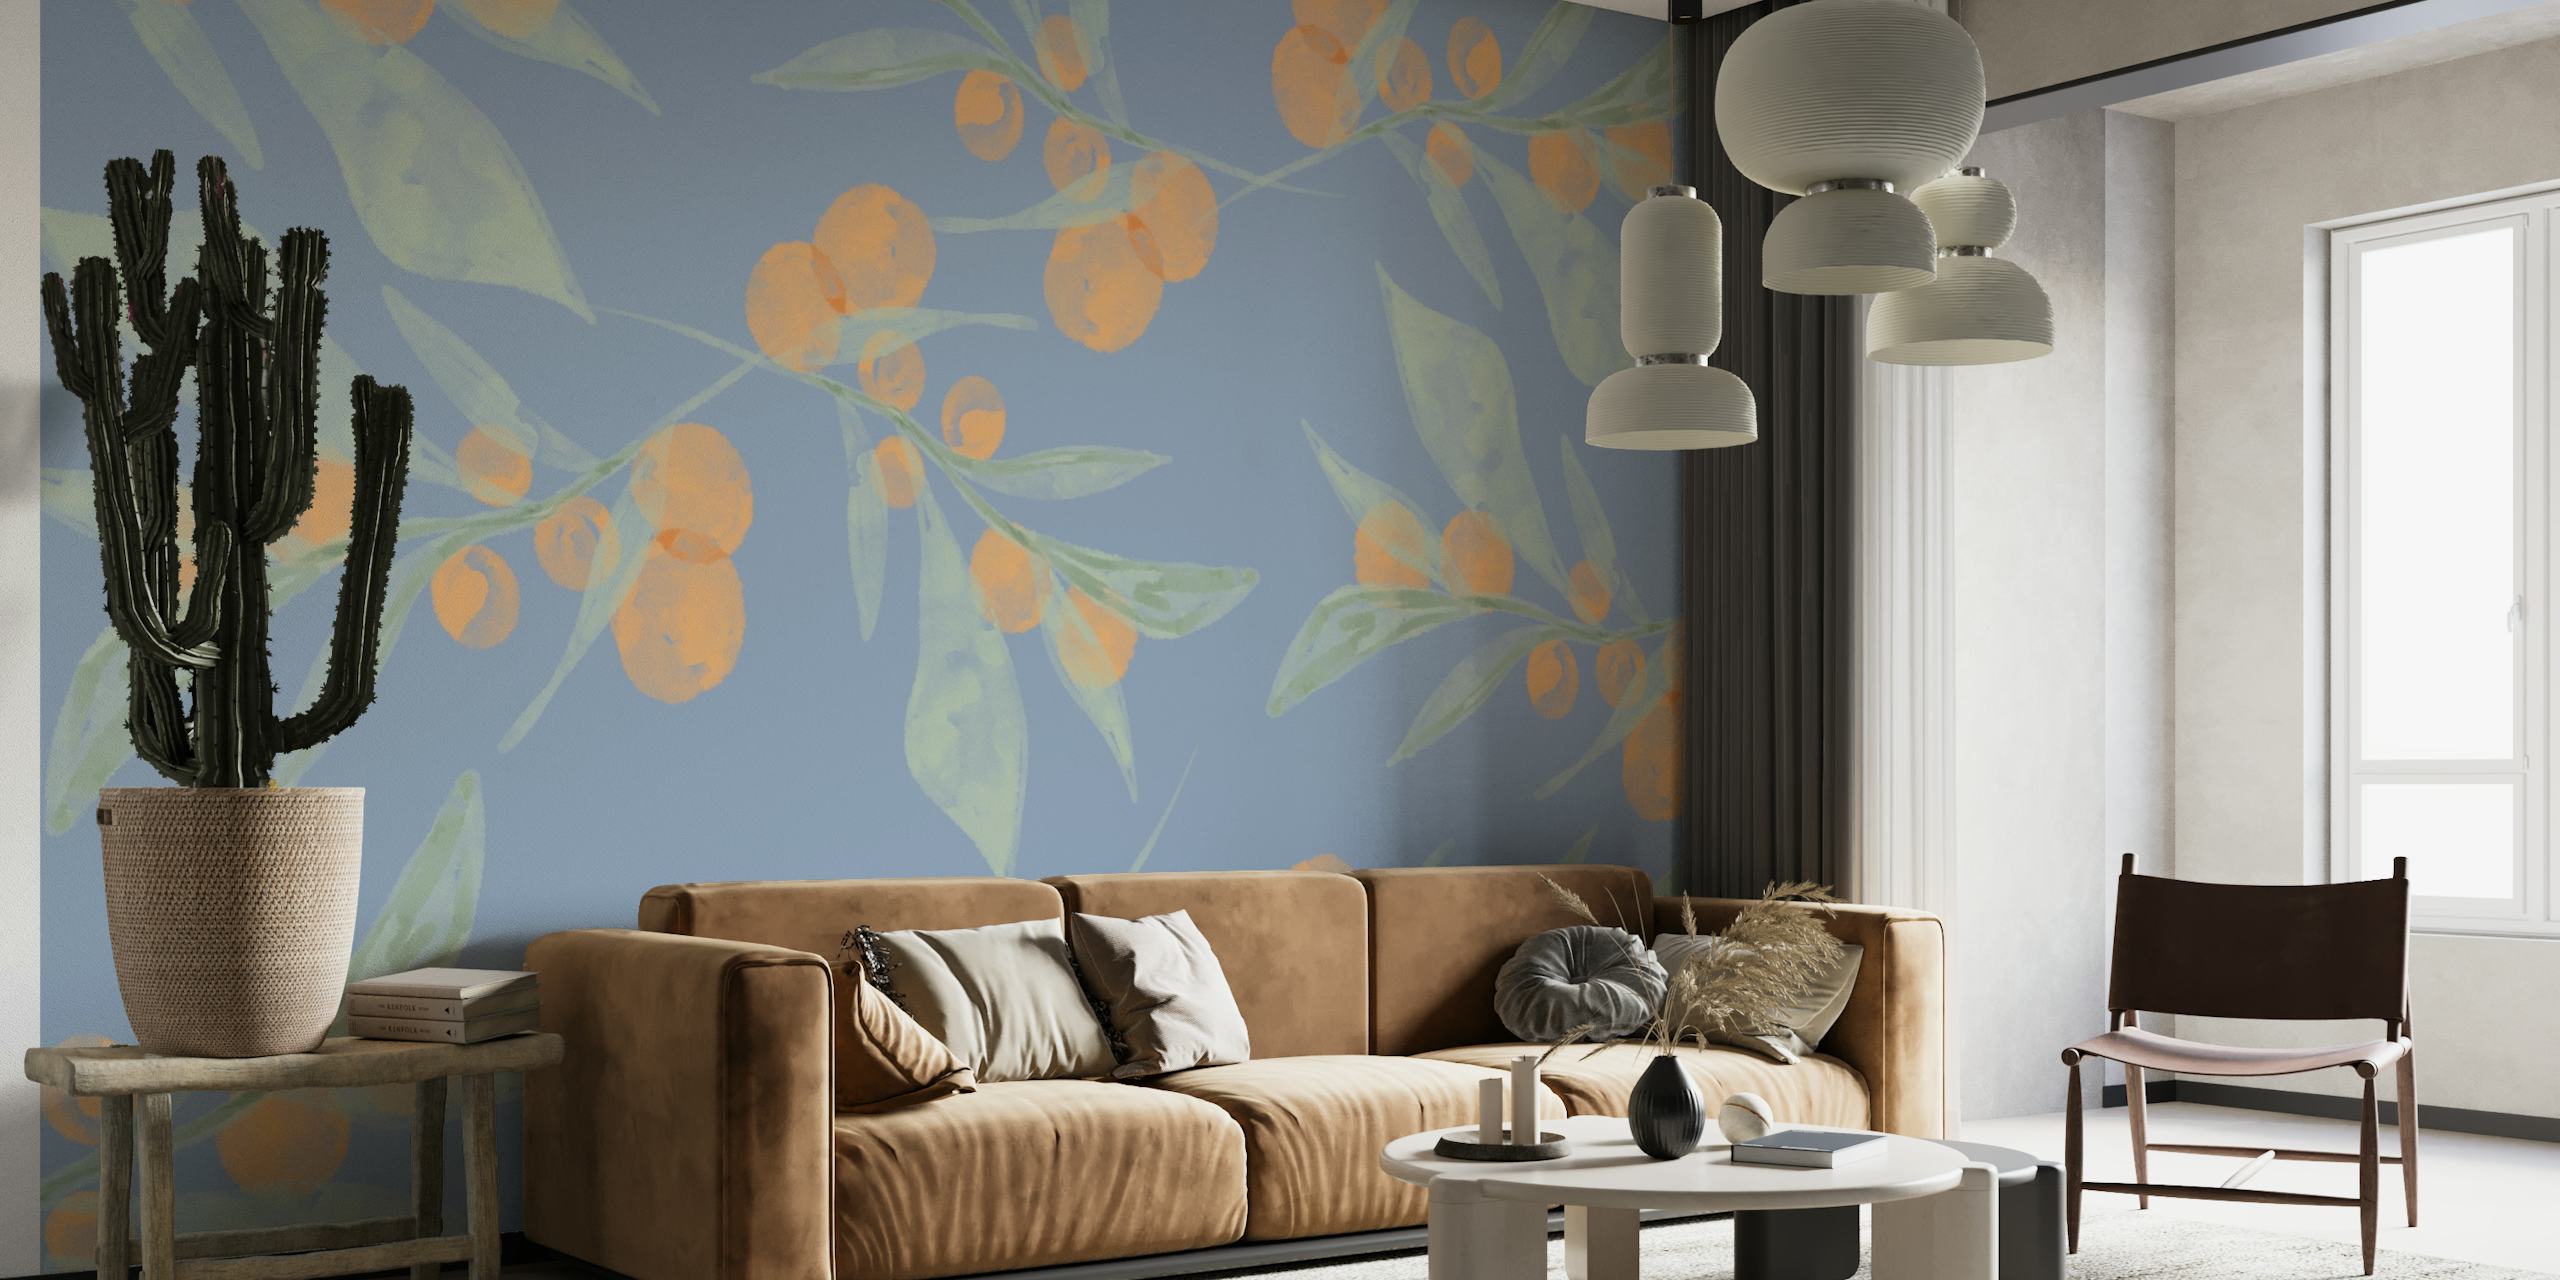 Clementine Wallpaper behang